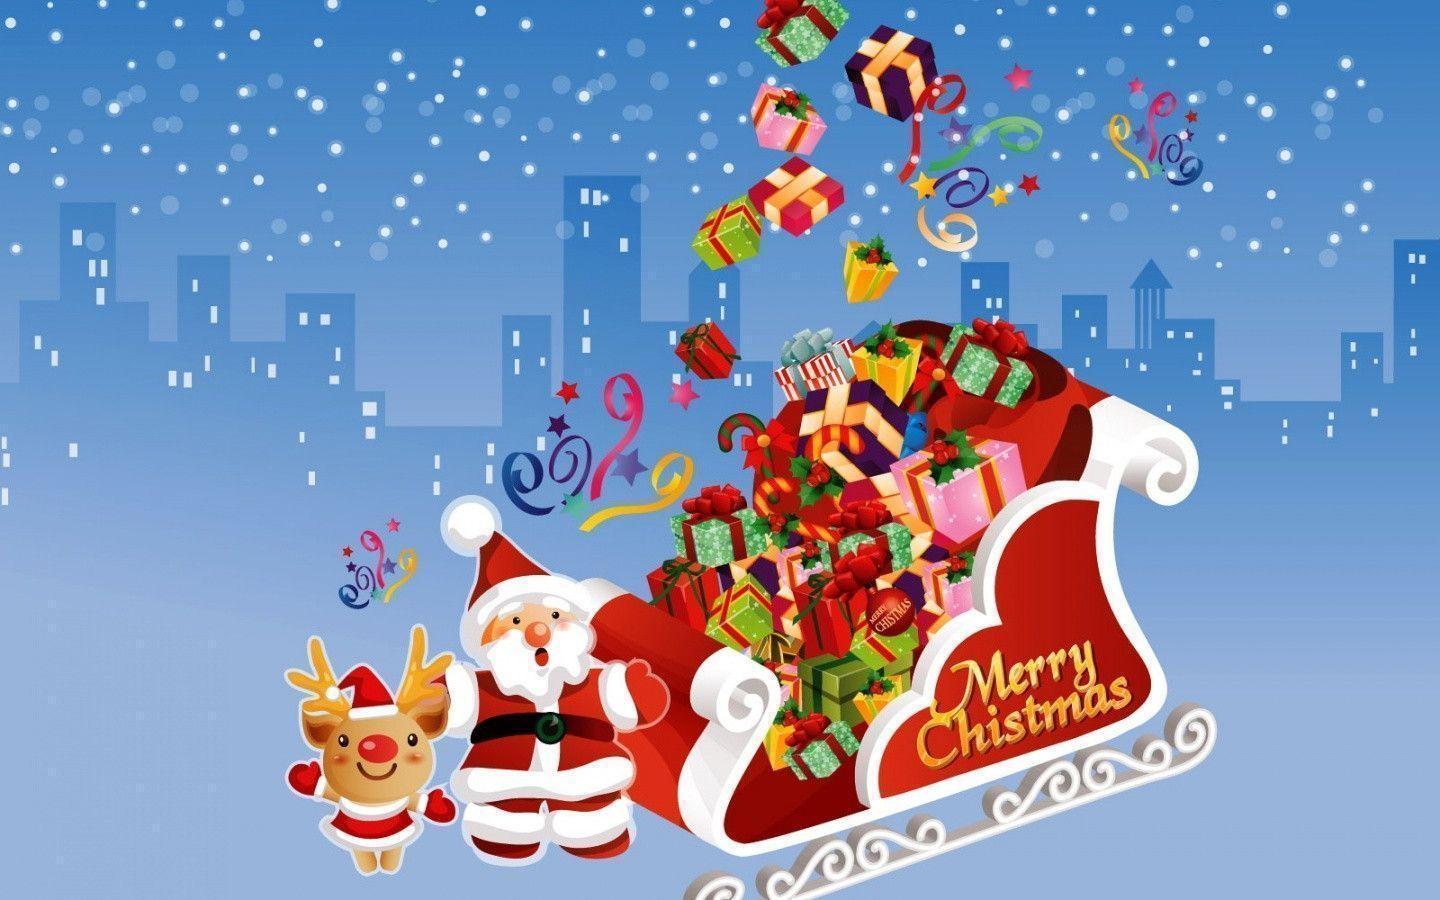 Merry Christmas Desktop Wallpaper. Merry Christmas HD Image